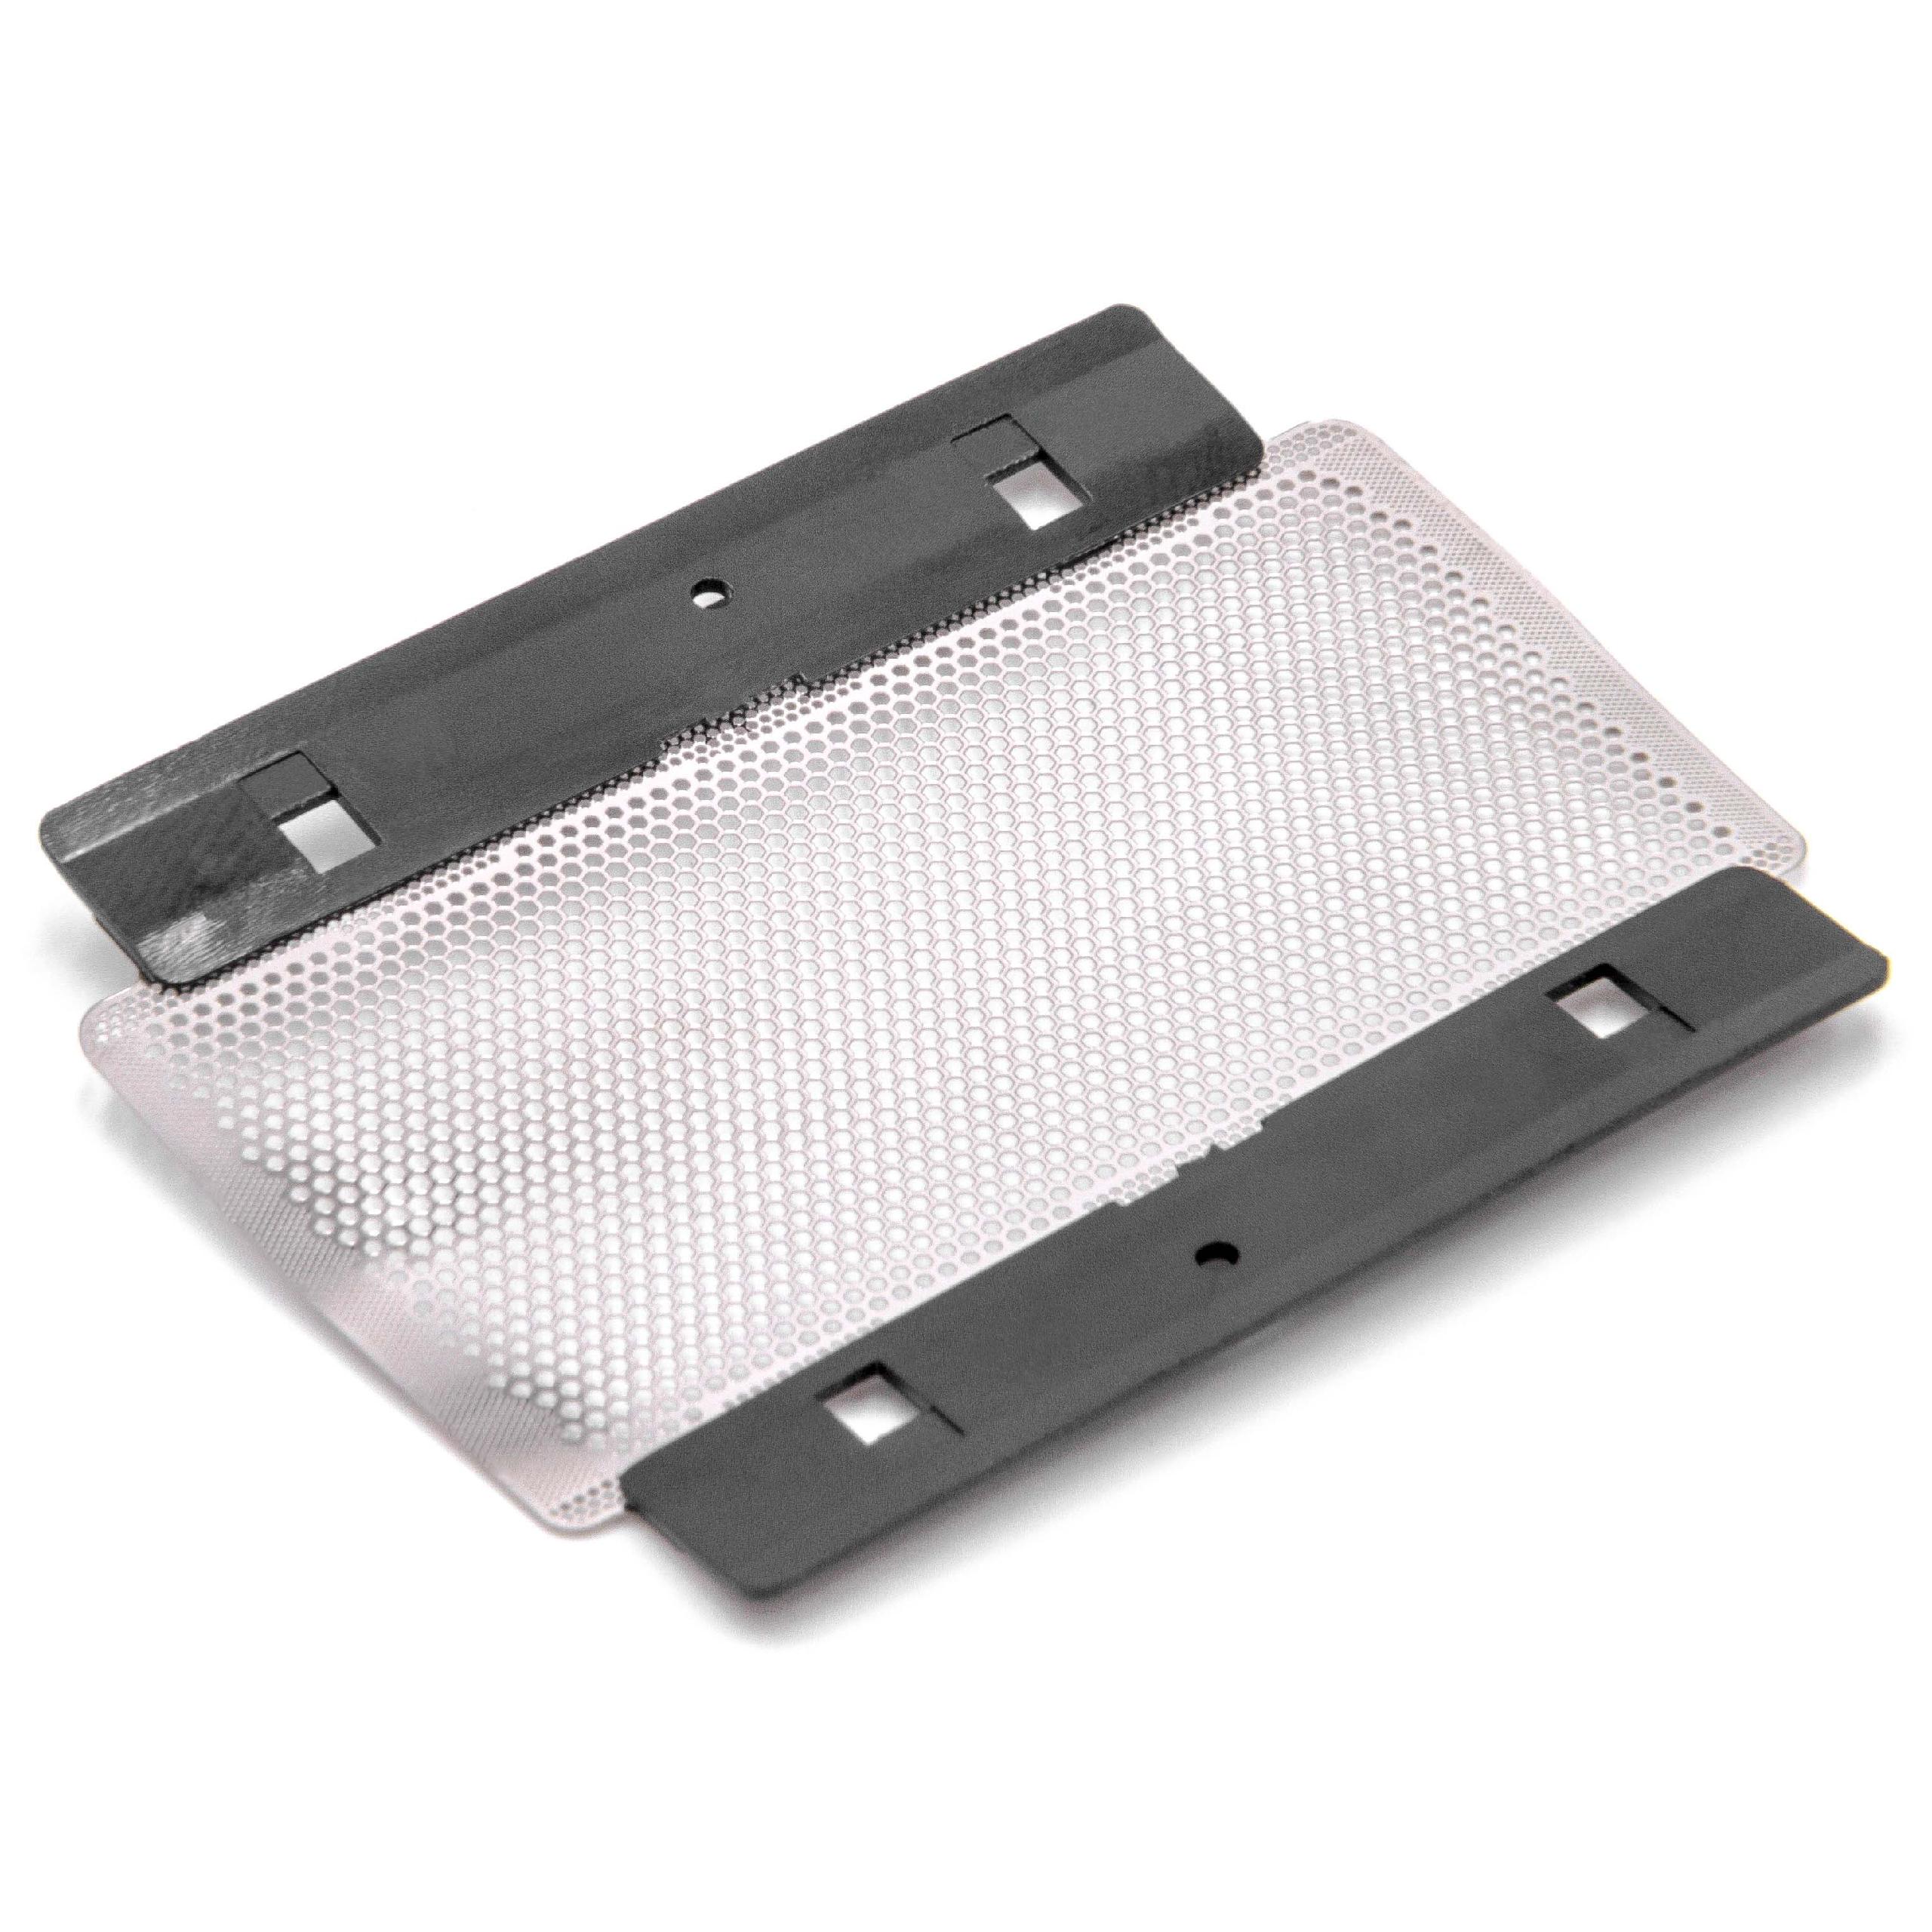 2x bloc de lames / grille de rasoir pour Braun 3600 - acier inoxydable / nickel